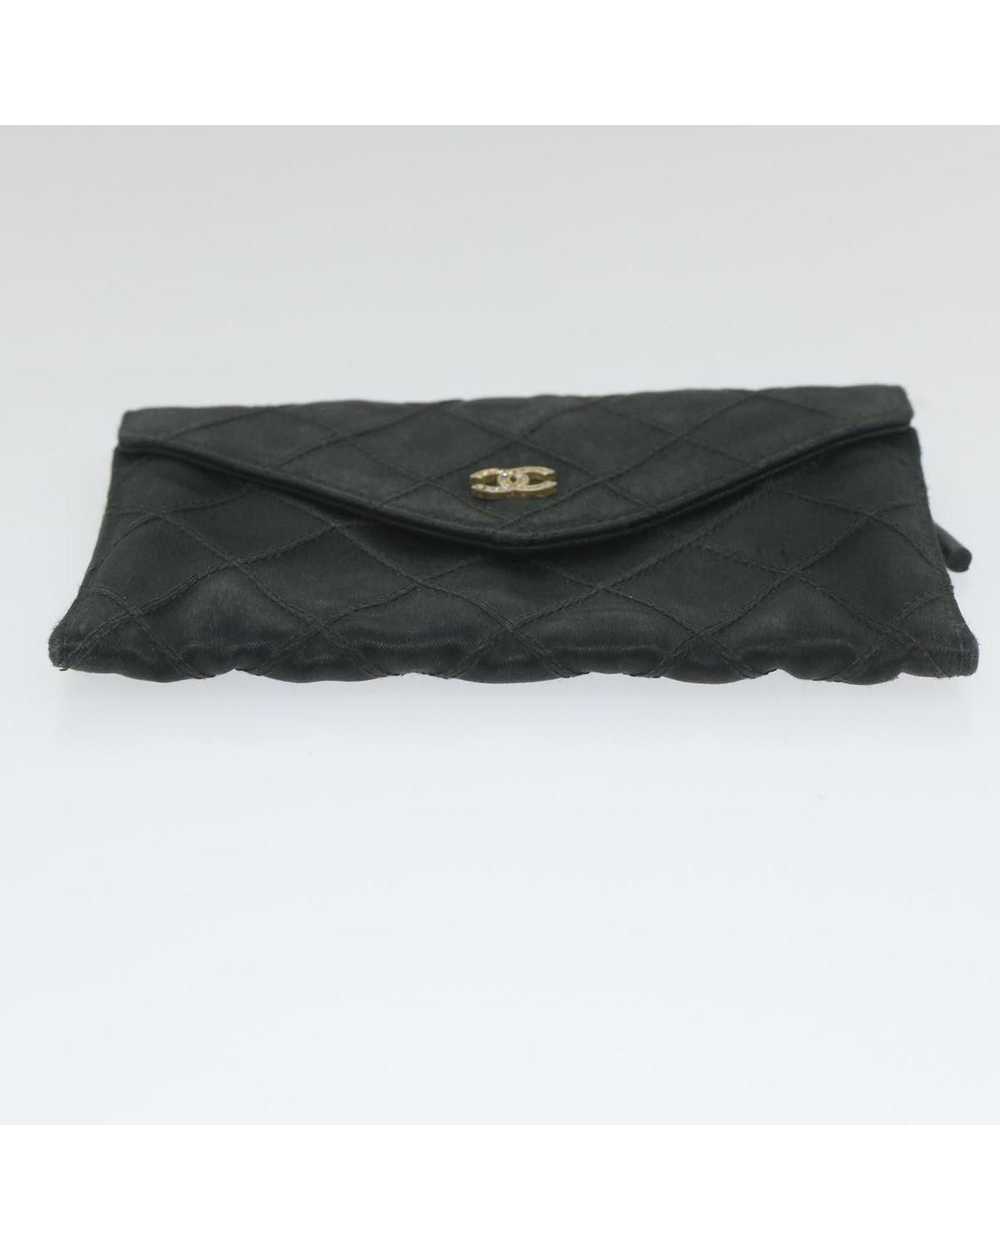 Chanel Black Nylon Pouch with CC Logo - image 6